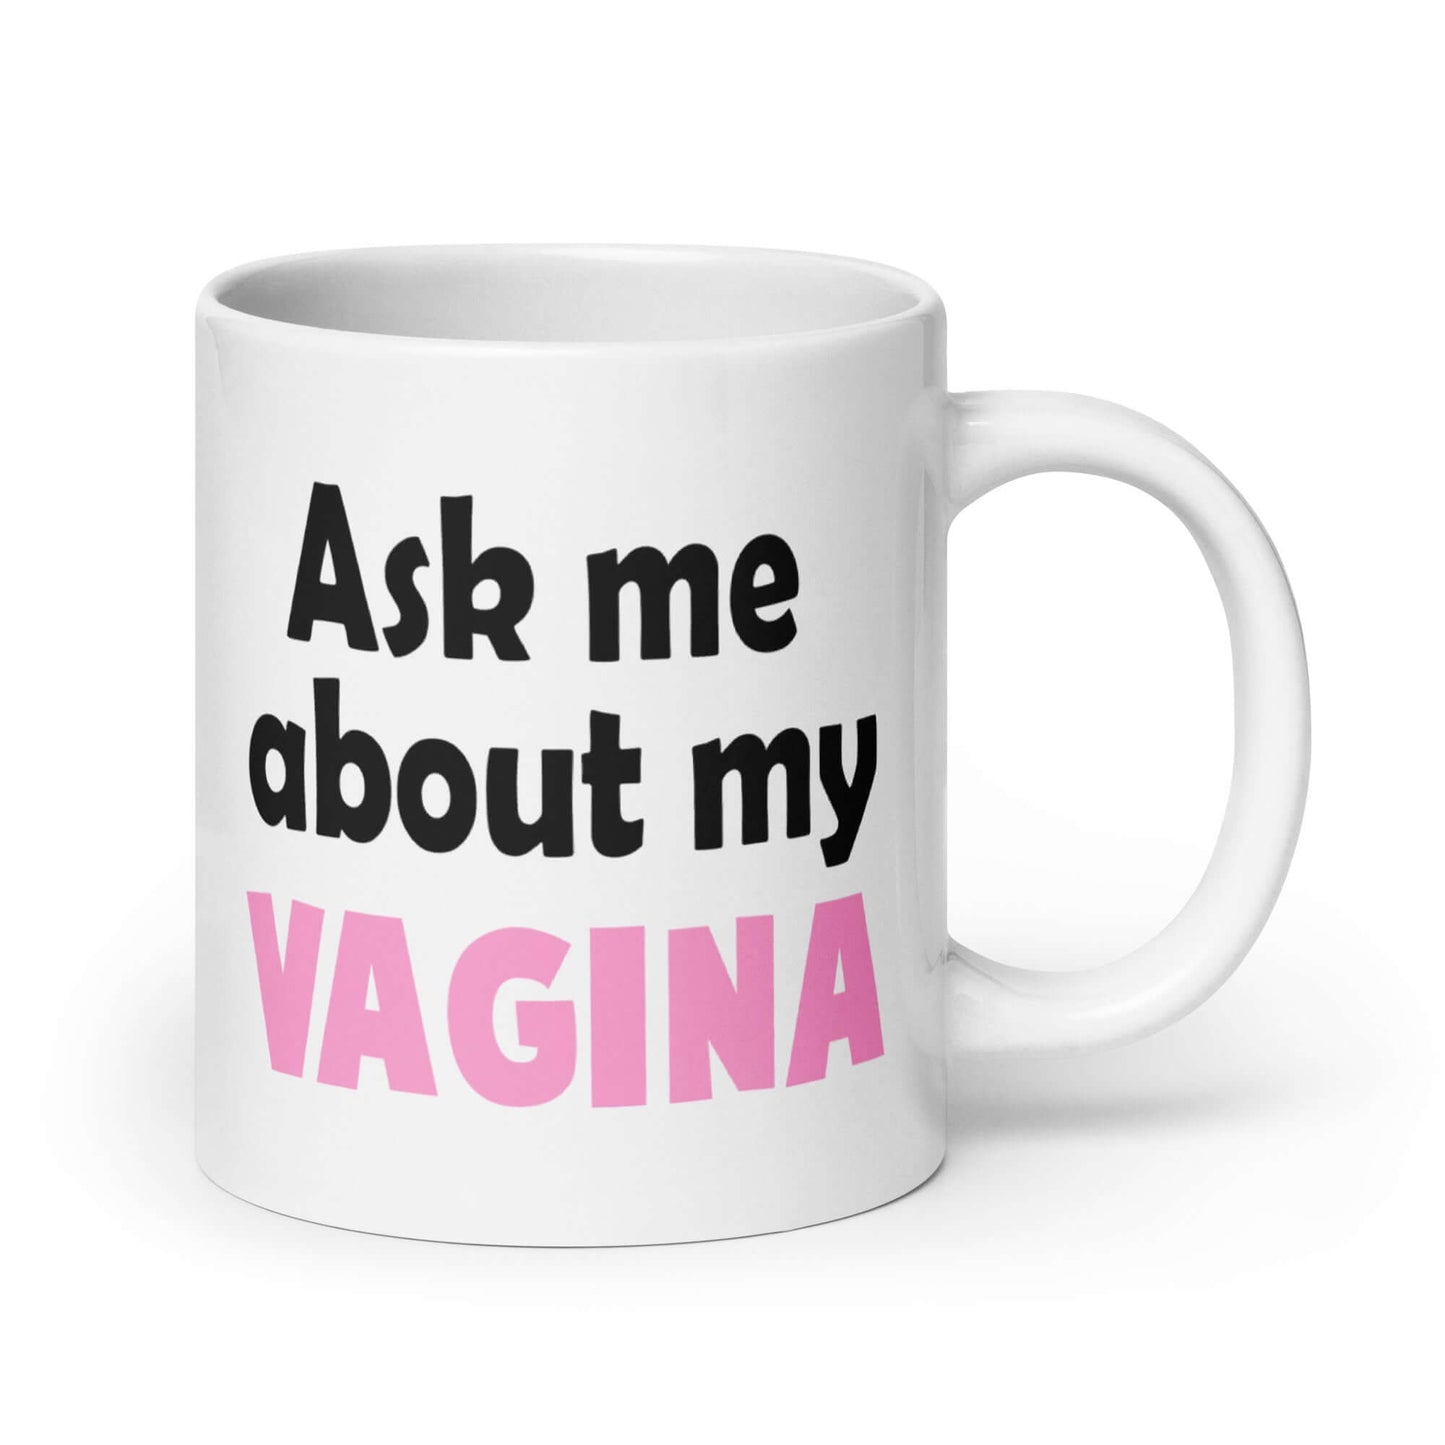 Ask me about my vagina girl power mug